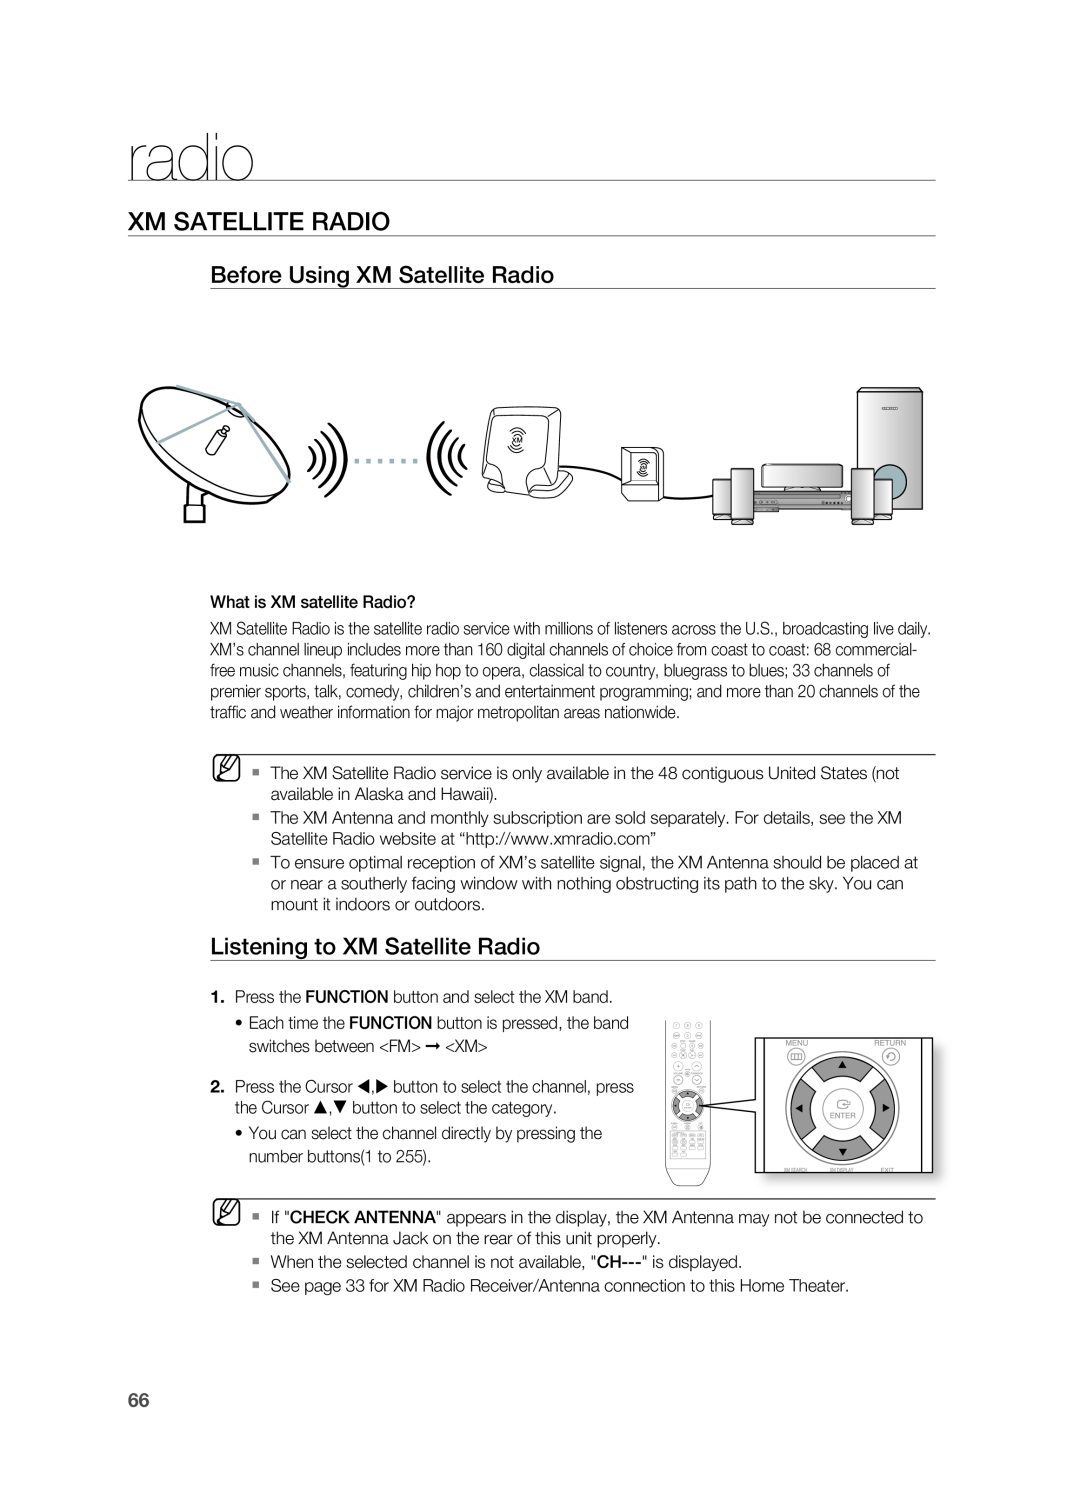 Samsung HT-TZ515 user manual XM SATELLITE rADIO, Before Using XM Satellite radio, Listening to XM Satellite radio 